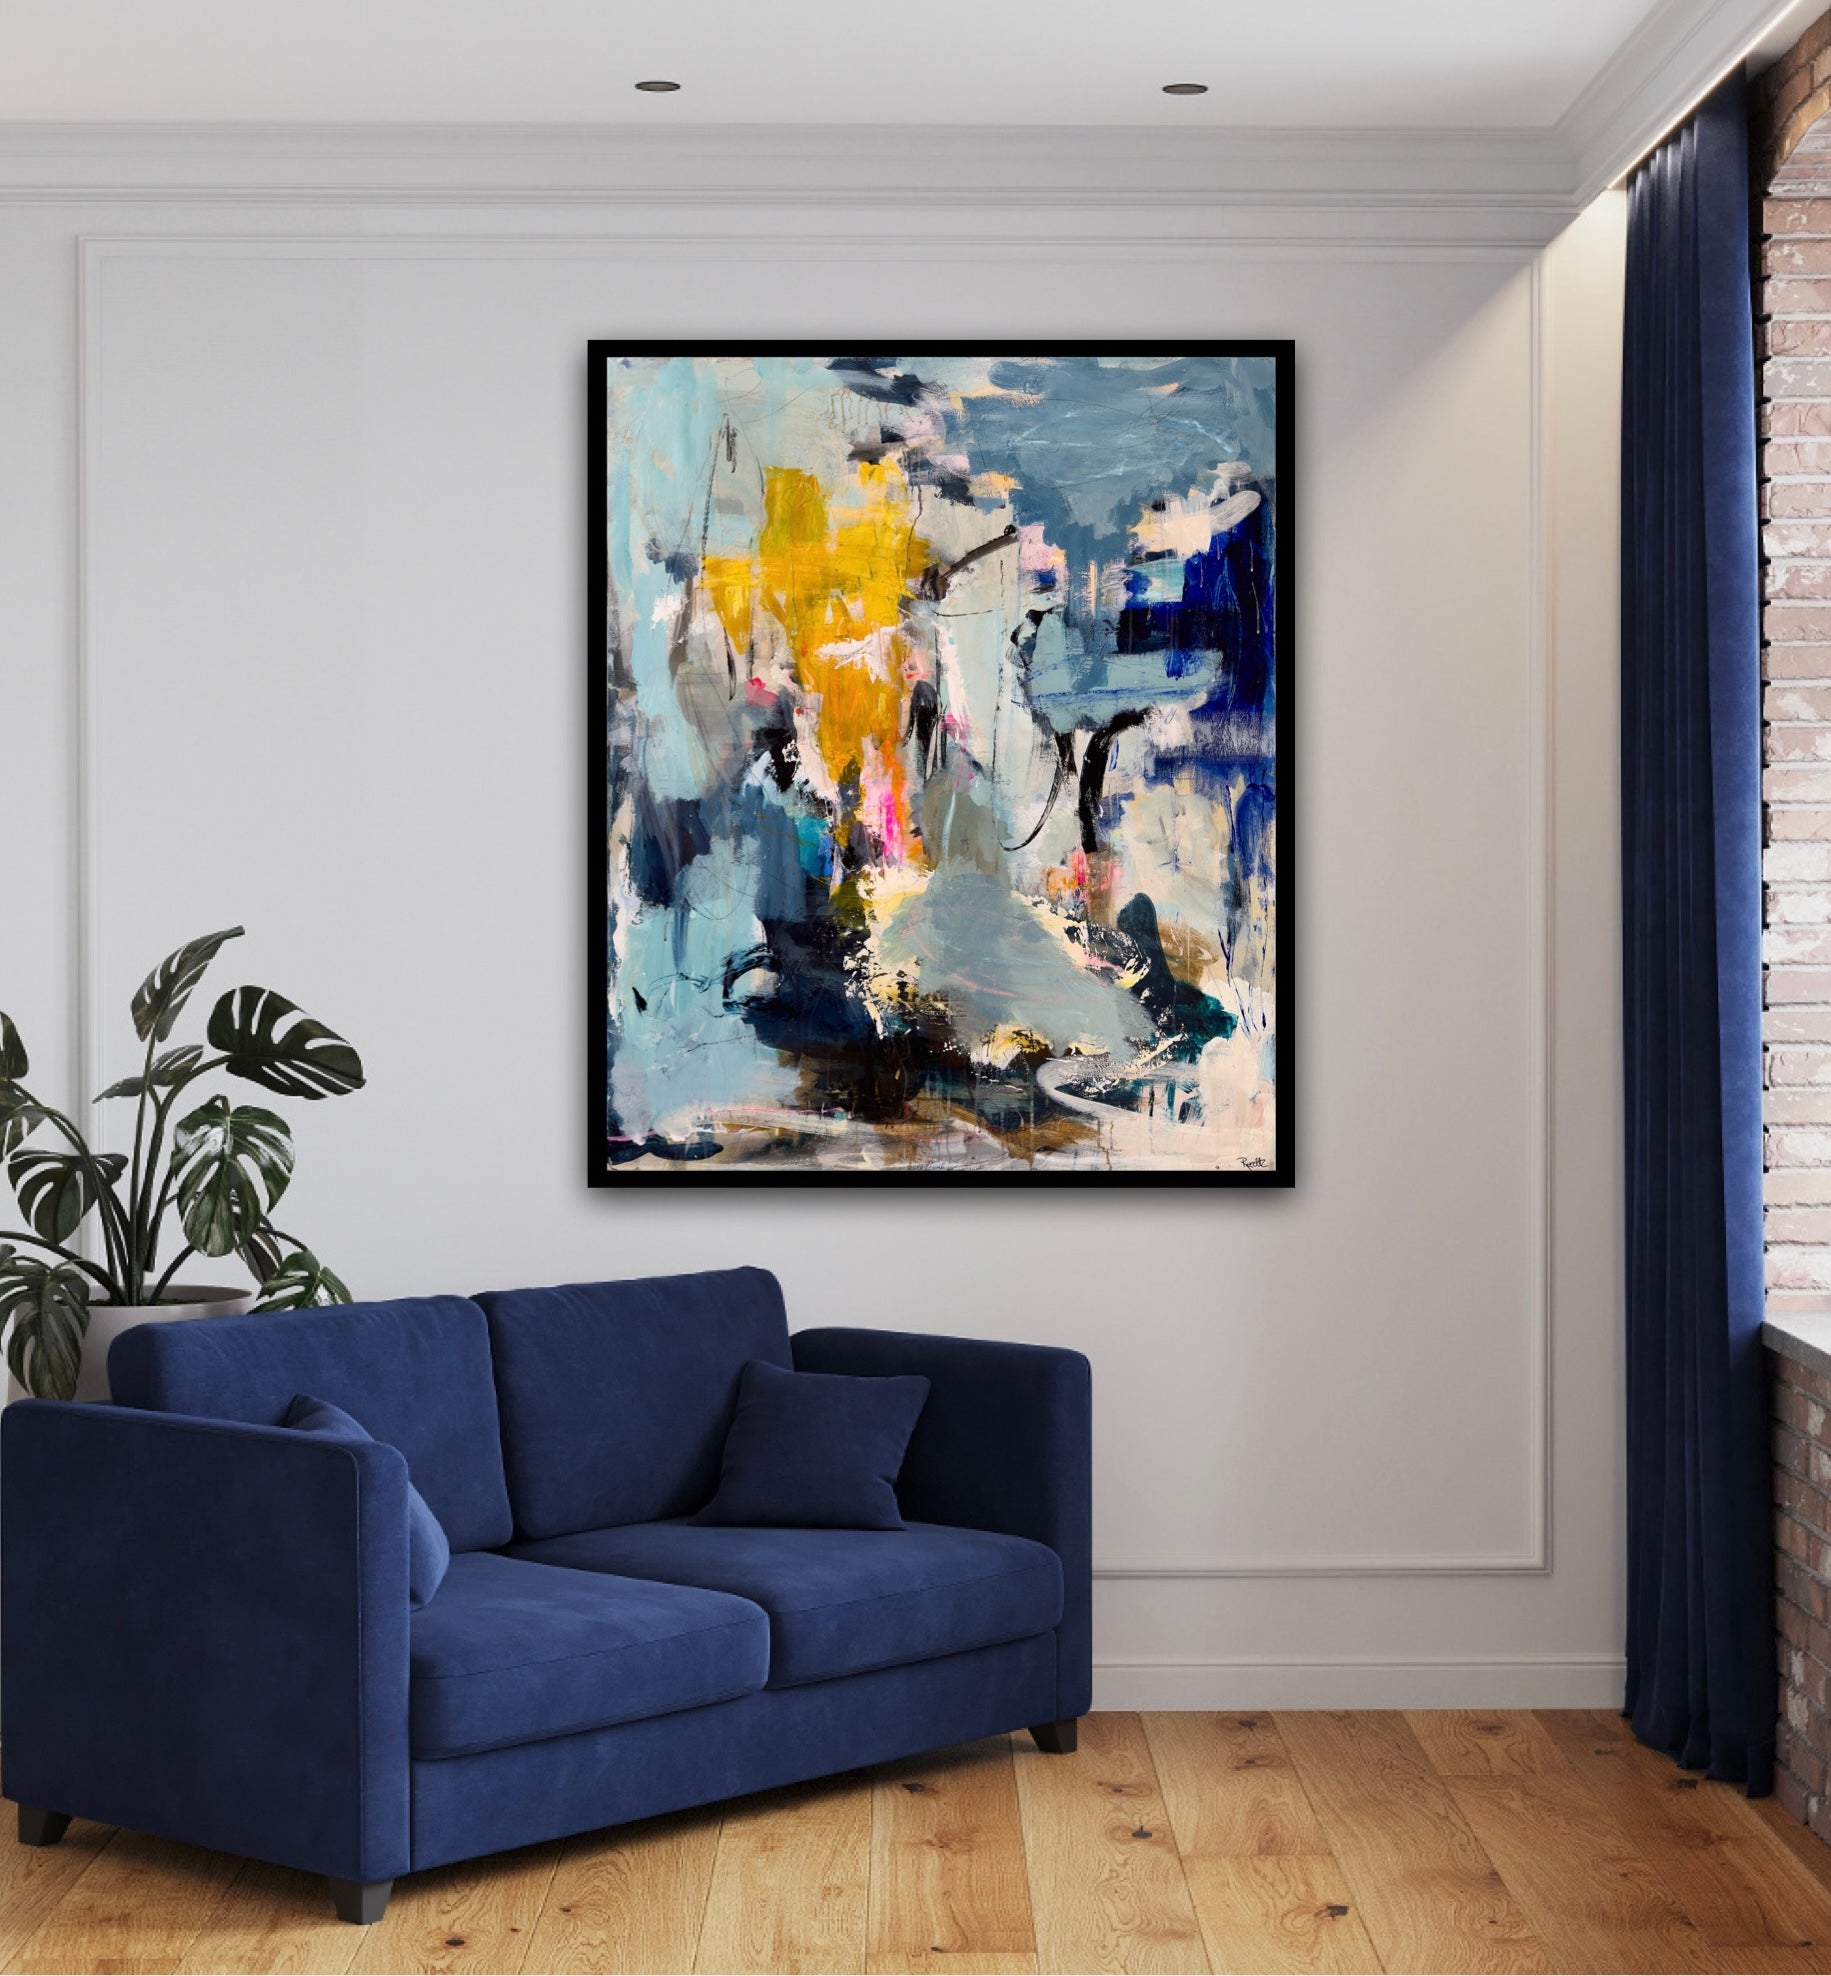 Abstrakt maleri, 120x100 cm, "Earth and water" by Lone Reedtz , Abstrakt ekspressivt akrylmaleri på lærred